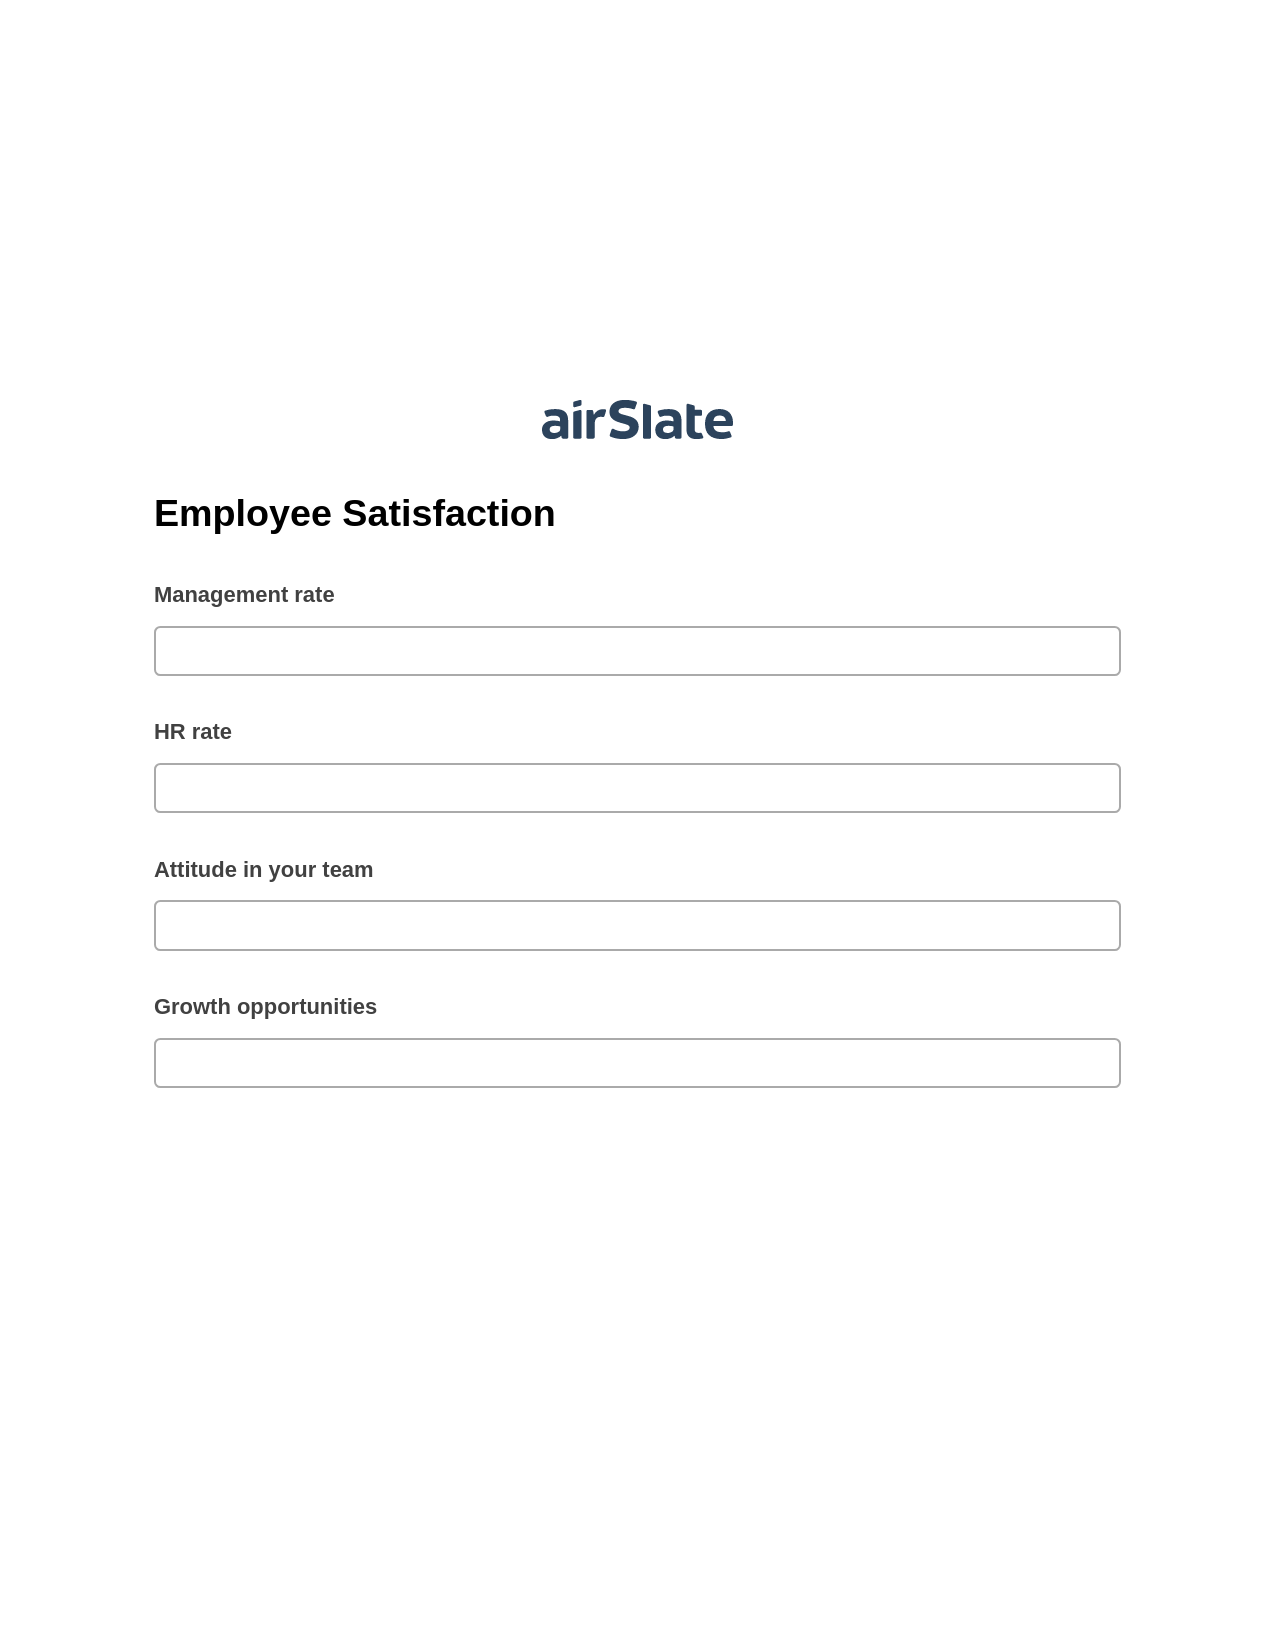 Employee Satisfaction Pre-fill from Google Sheets Bot, SendGrid send Campaign bot, OneDrive Bot